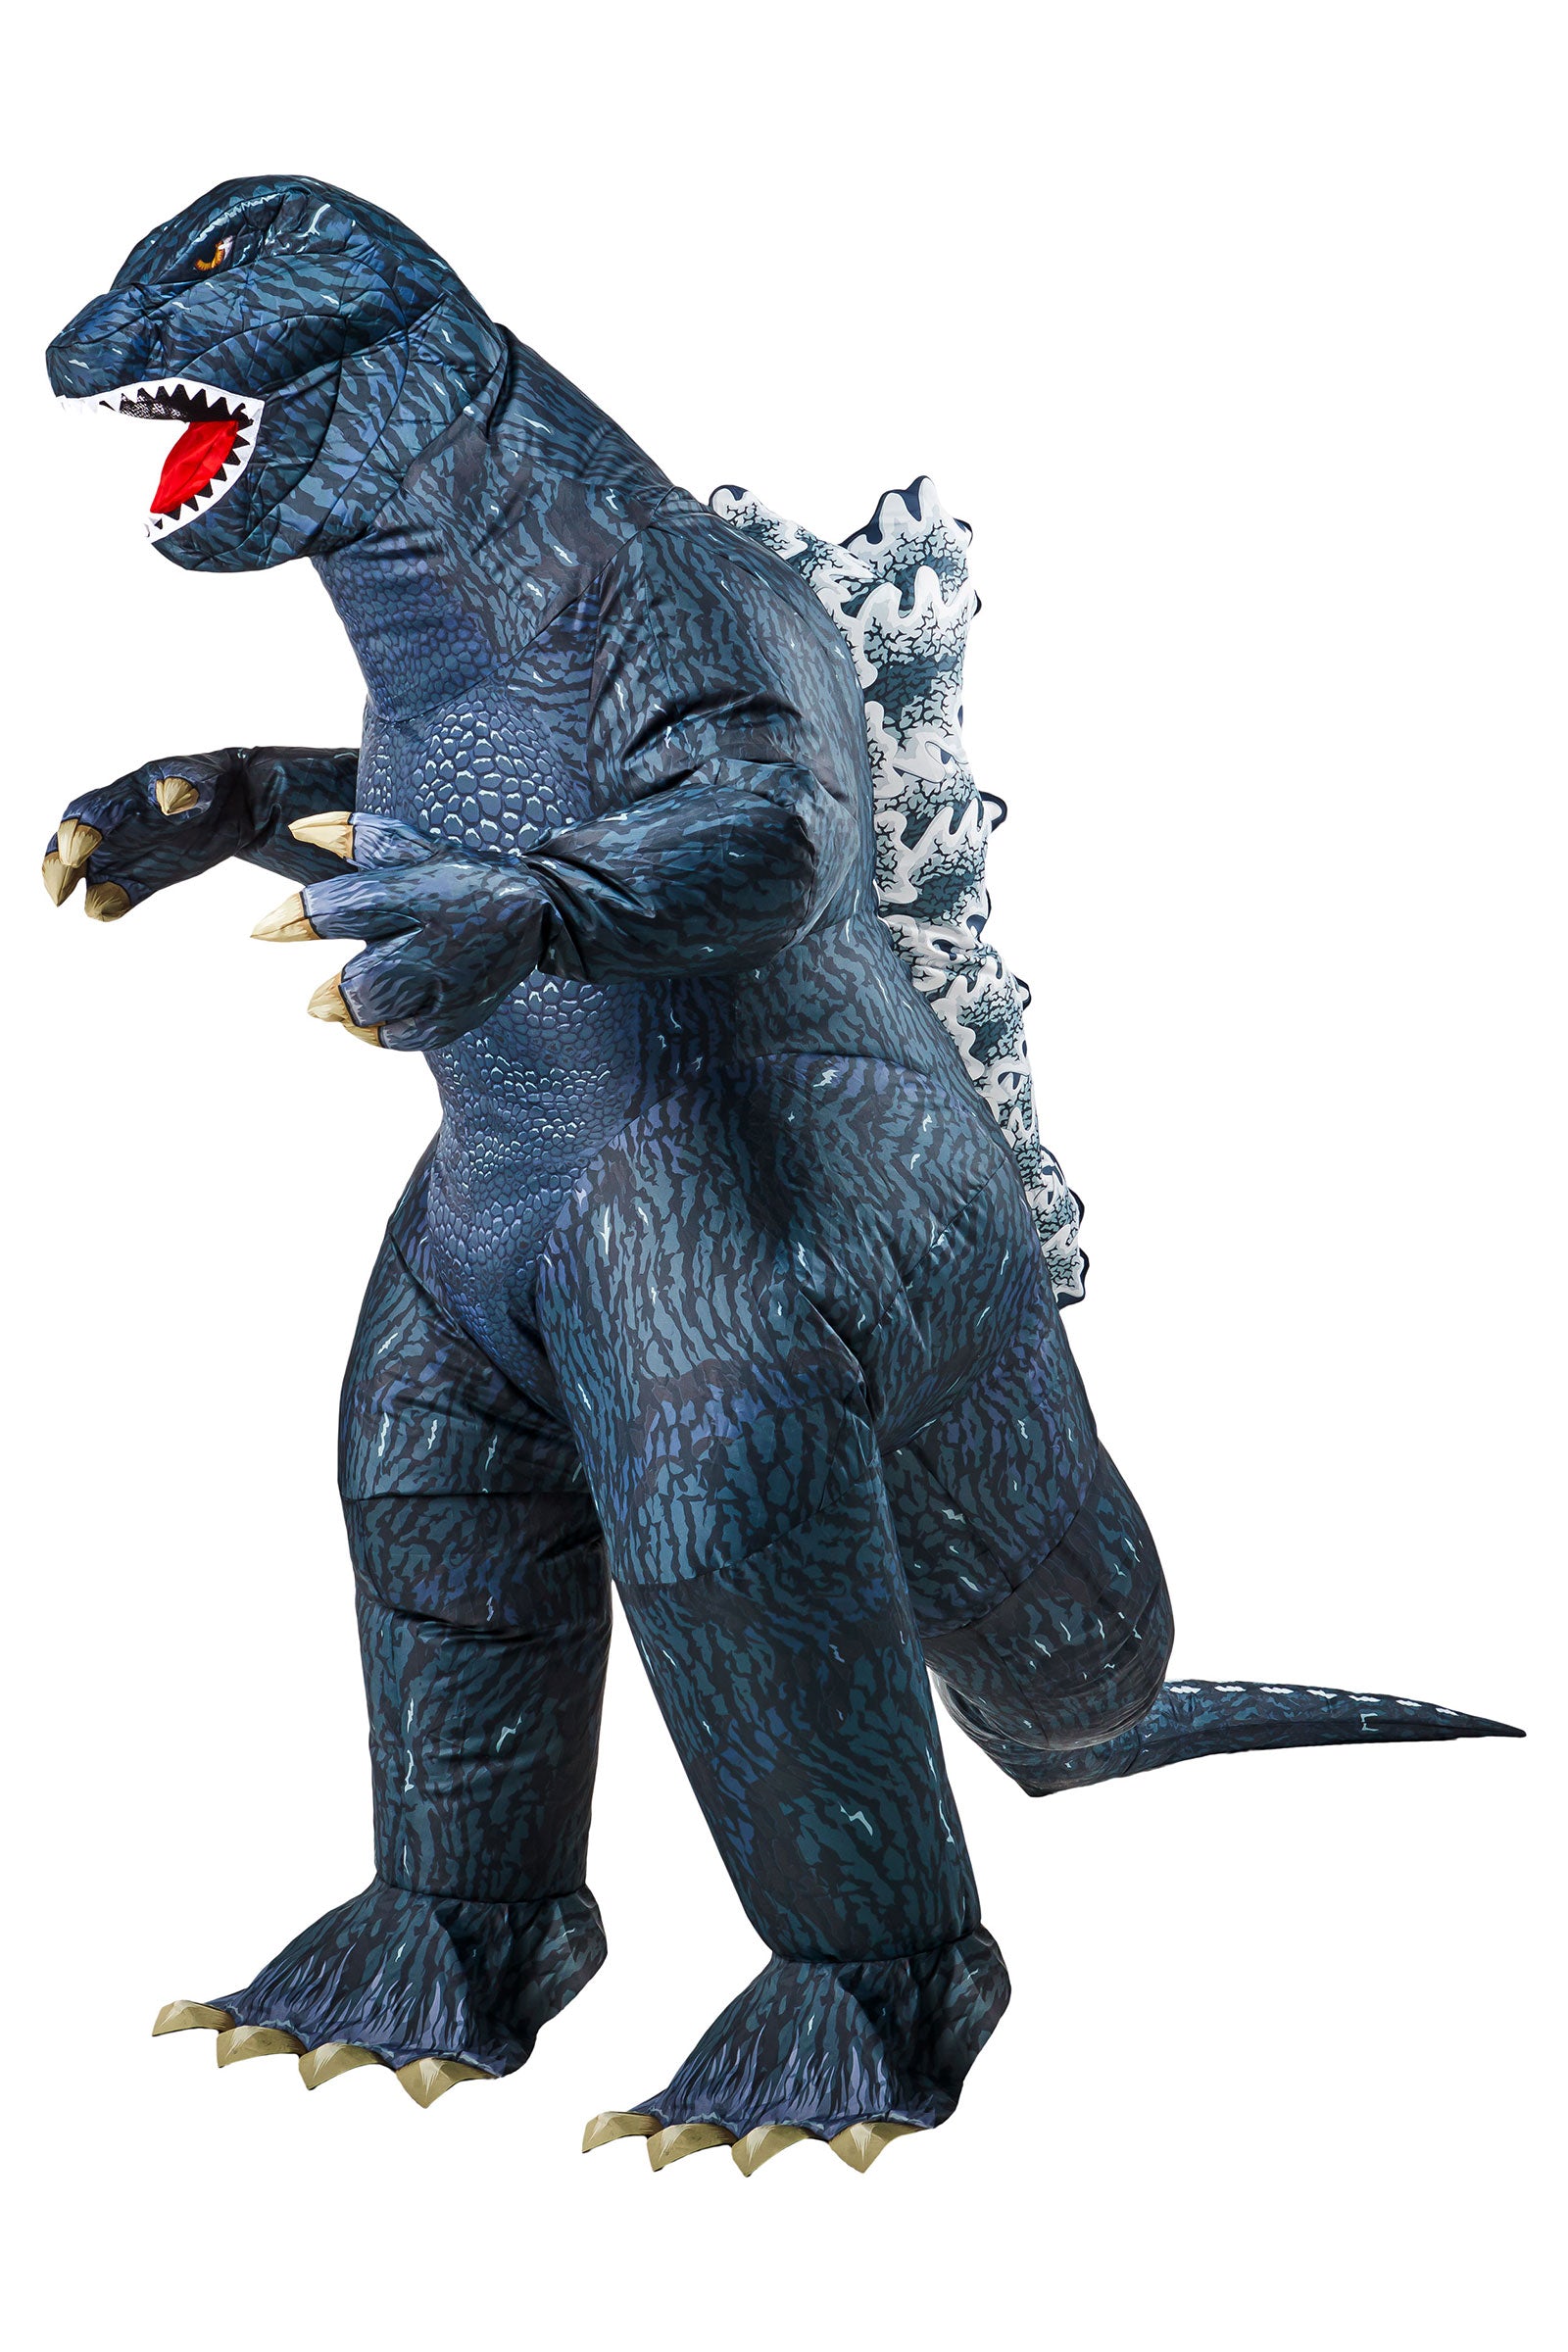 Godzilla Adult Inflatable